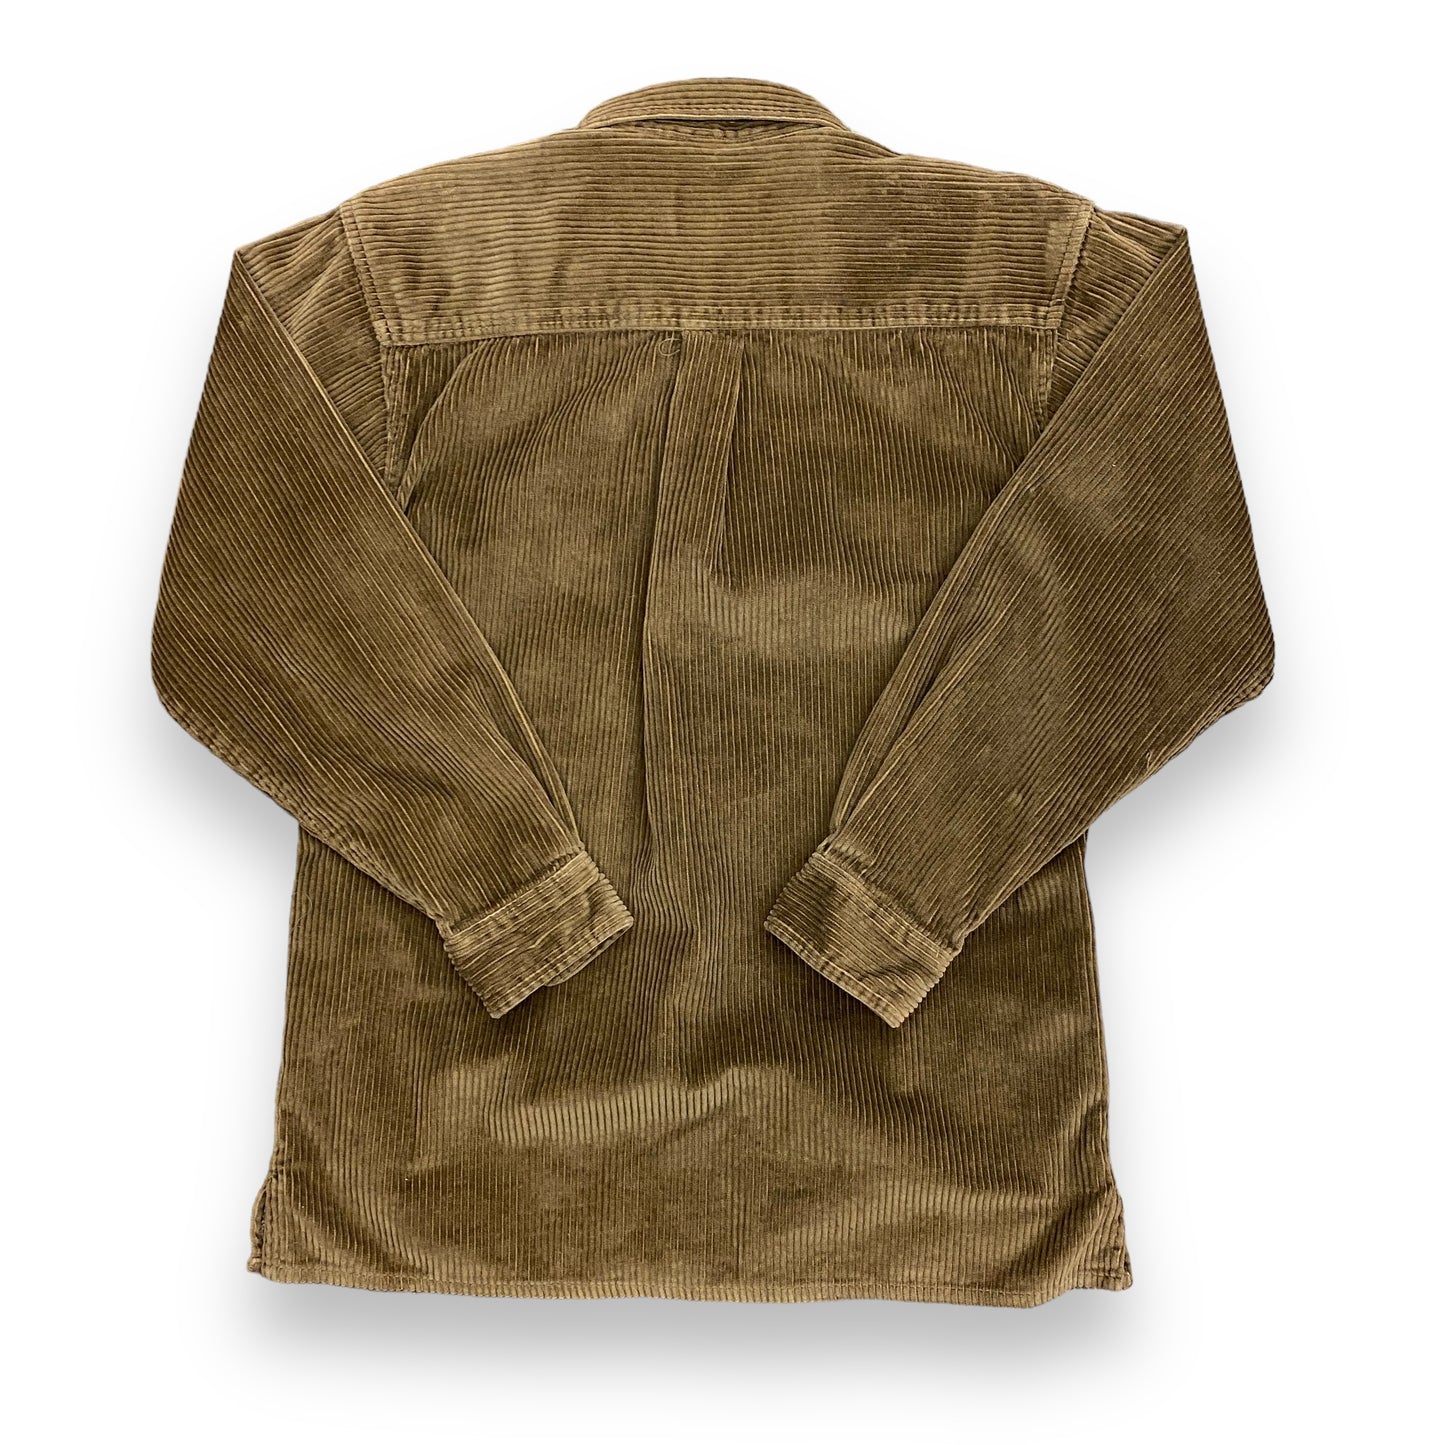 90s Bogari Studio Brown Corduroy Heavyweight Button Up Shirt - Size Medium